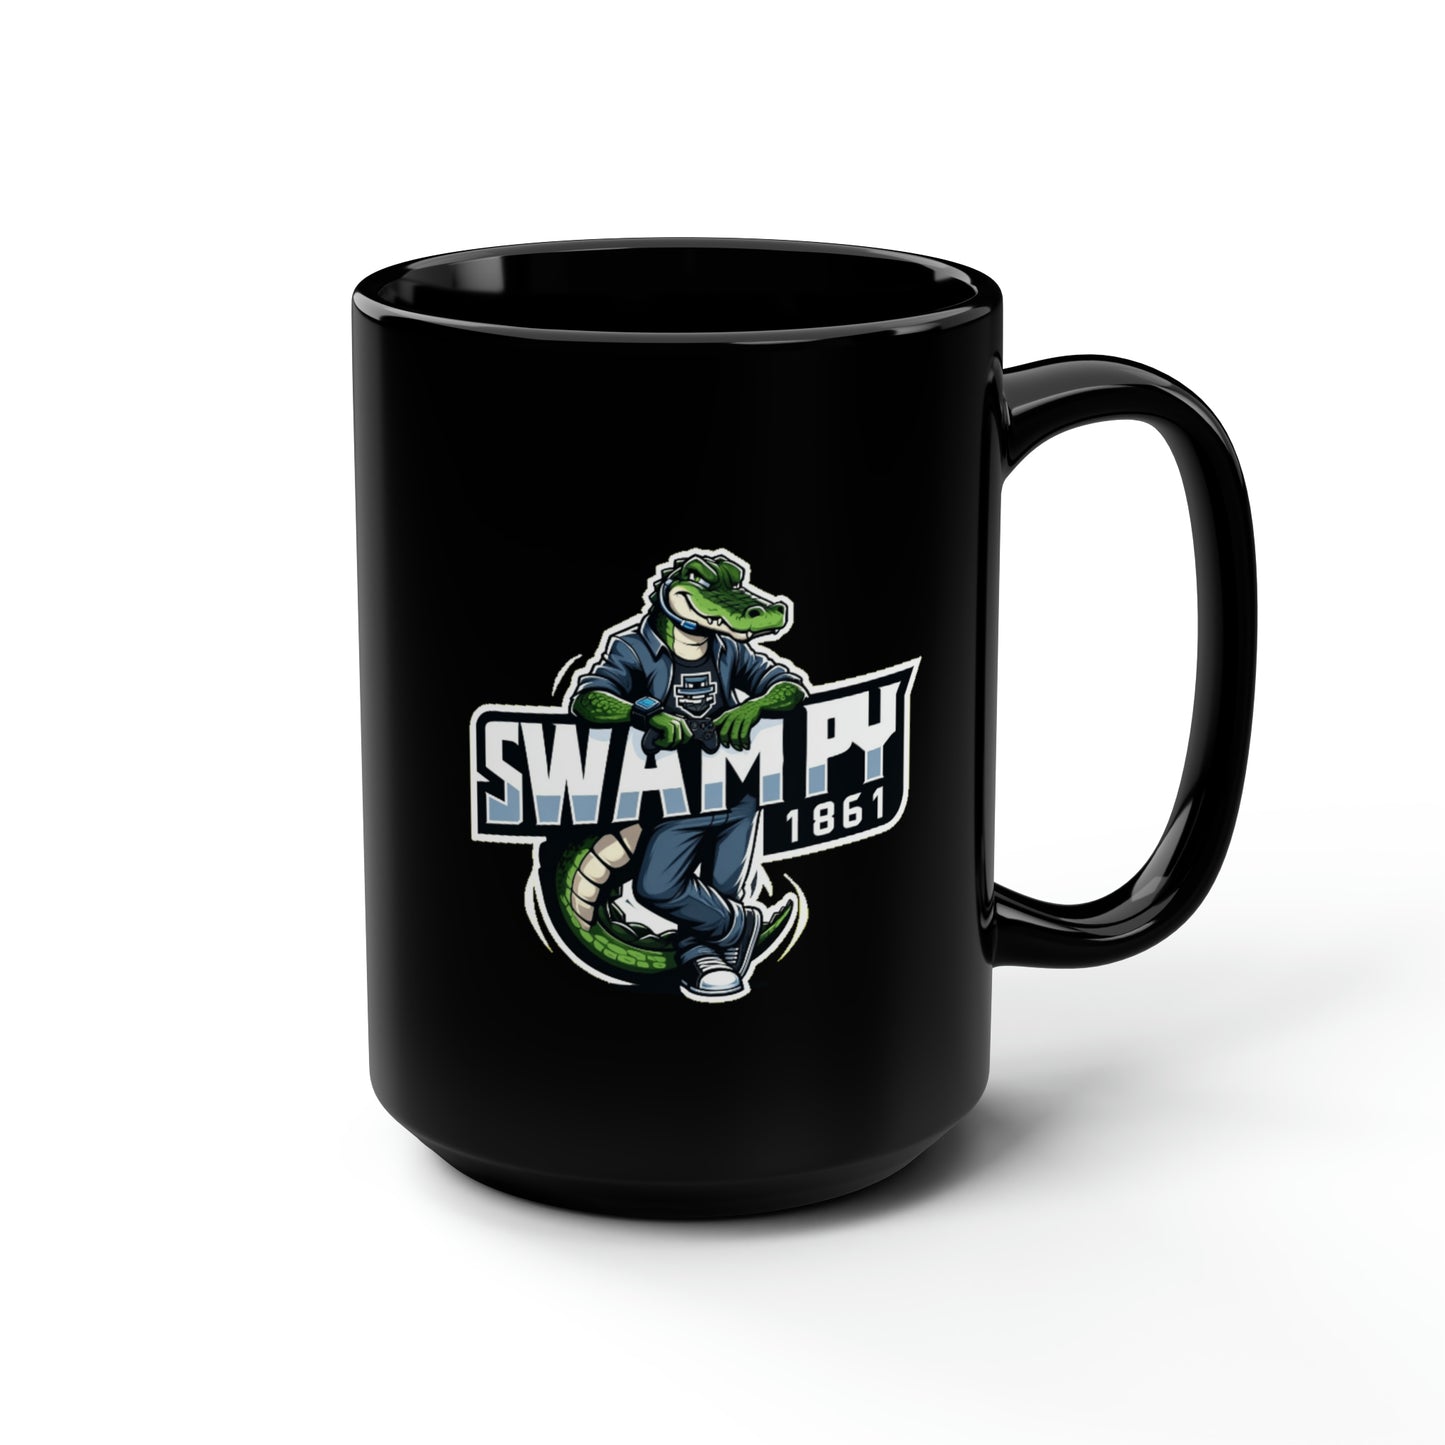 Swampy Black Mug, 15oz